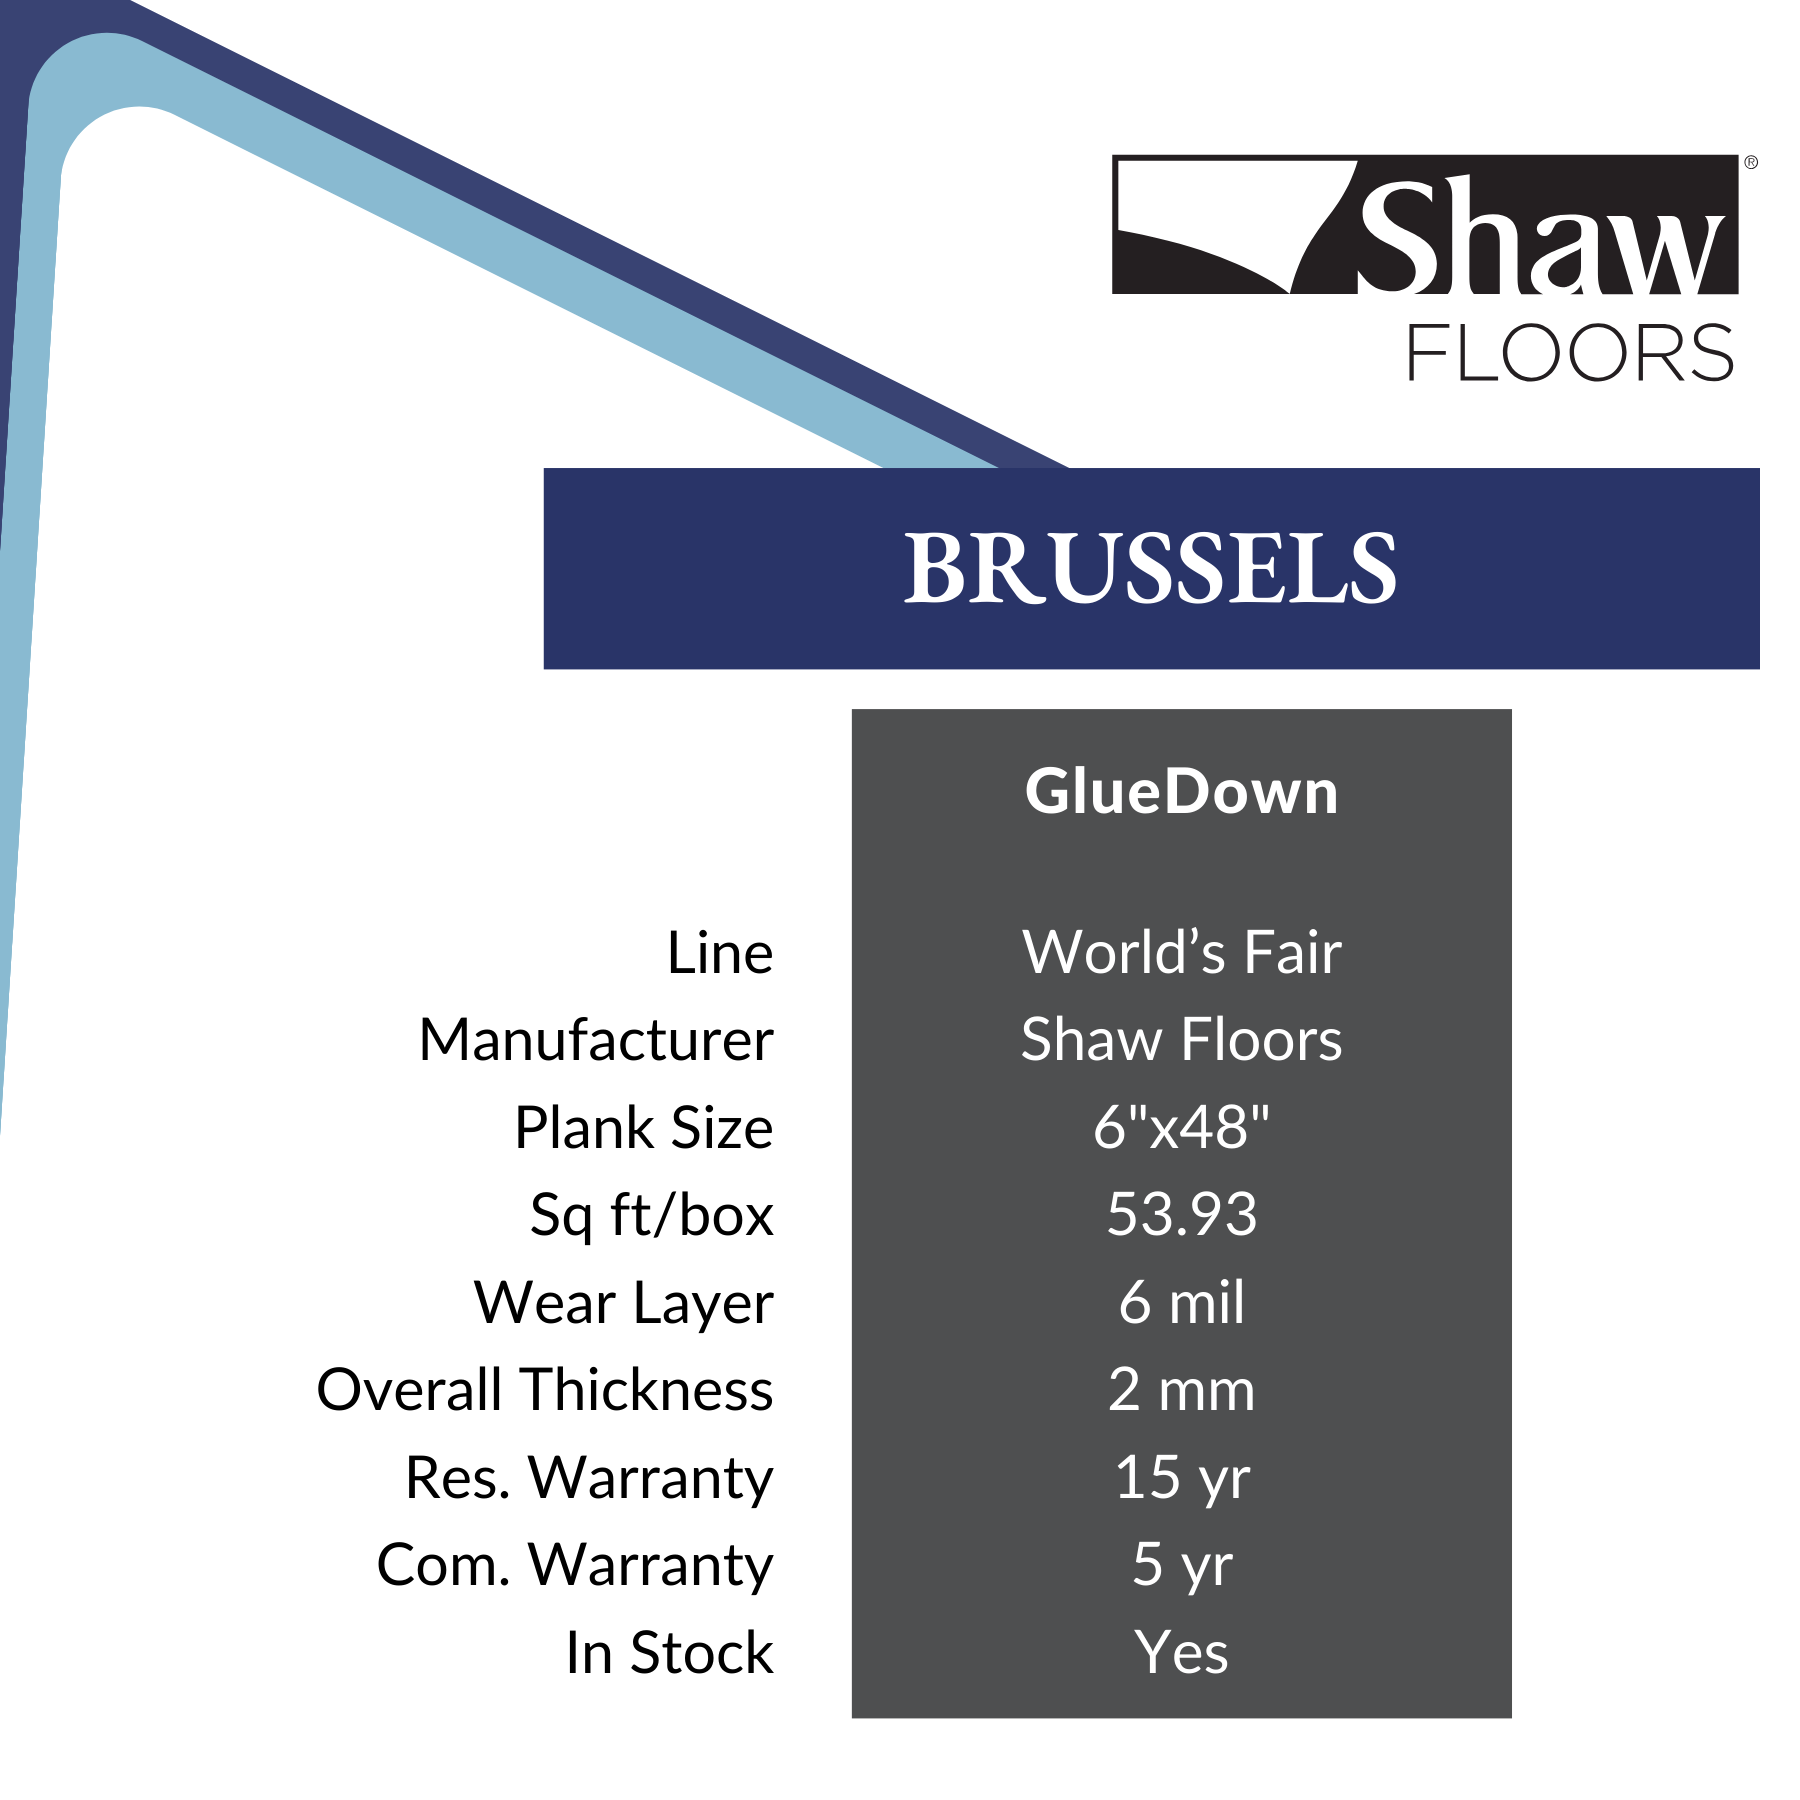 Brussels by Shaw Floors, LVT Glue Down Flooring, Calhoun's Springfield IL Specs: 6 mil wear layer